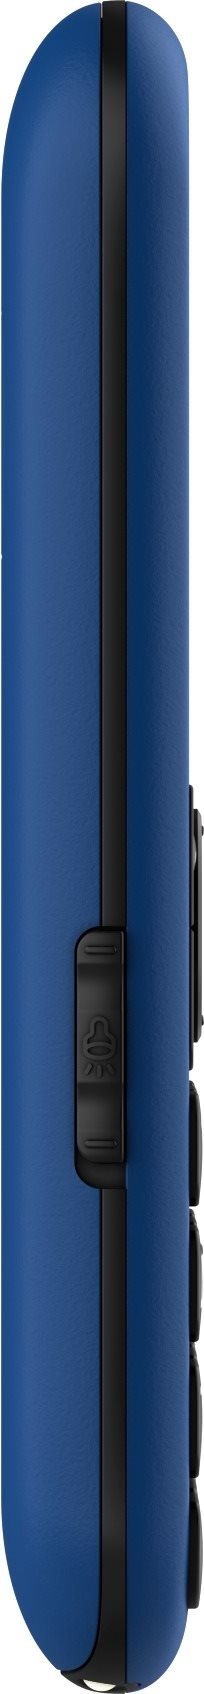 Mobiltelefon CPA Halo 21 Senior kék